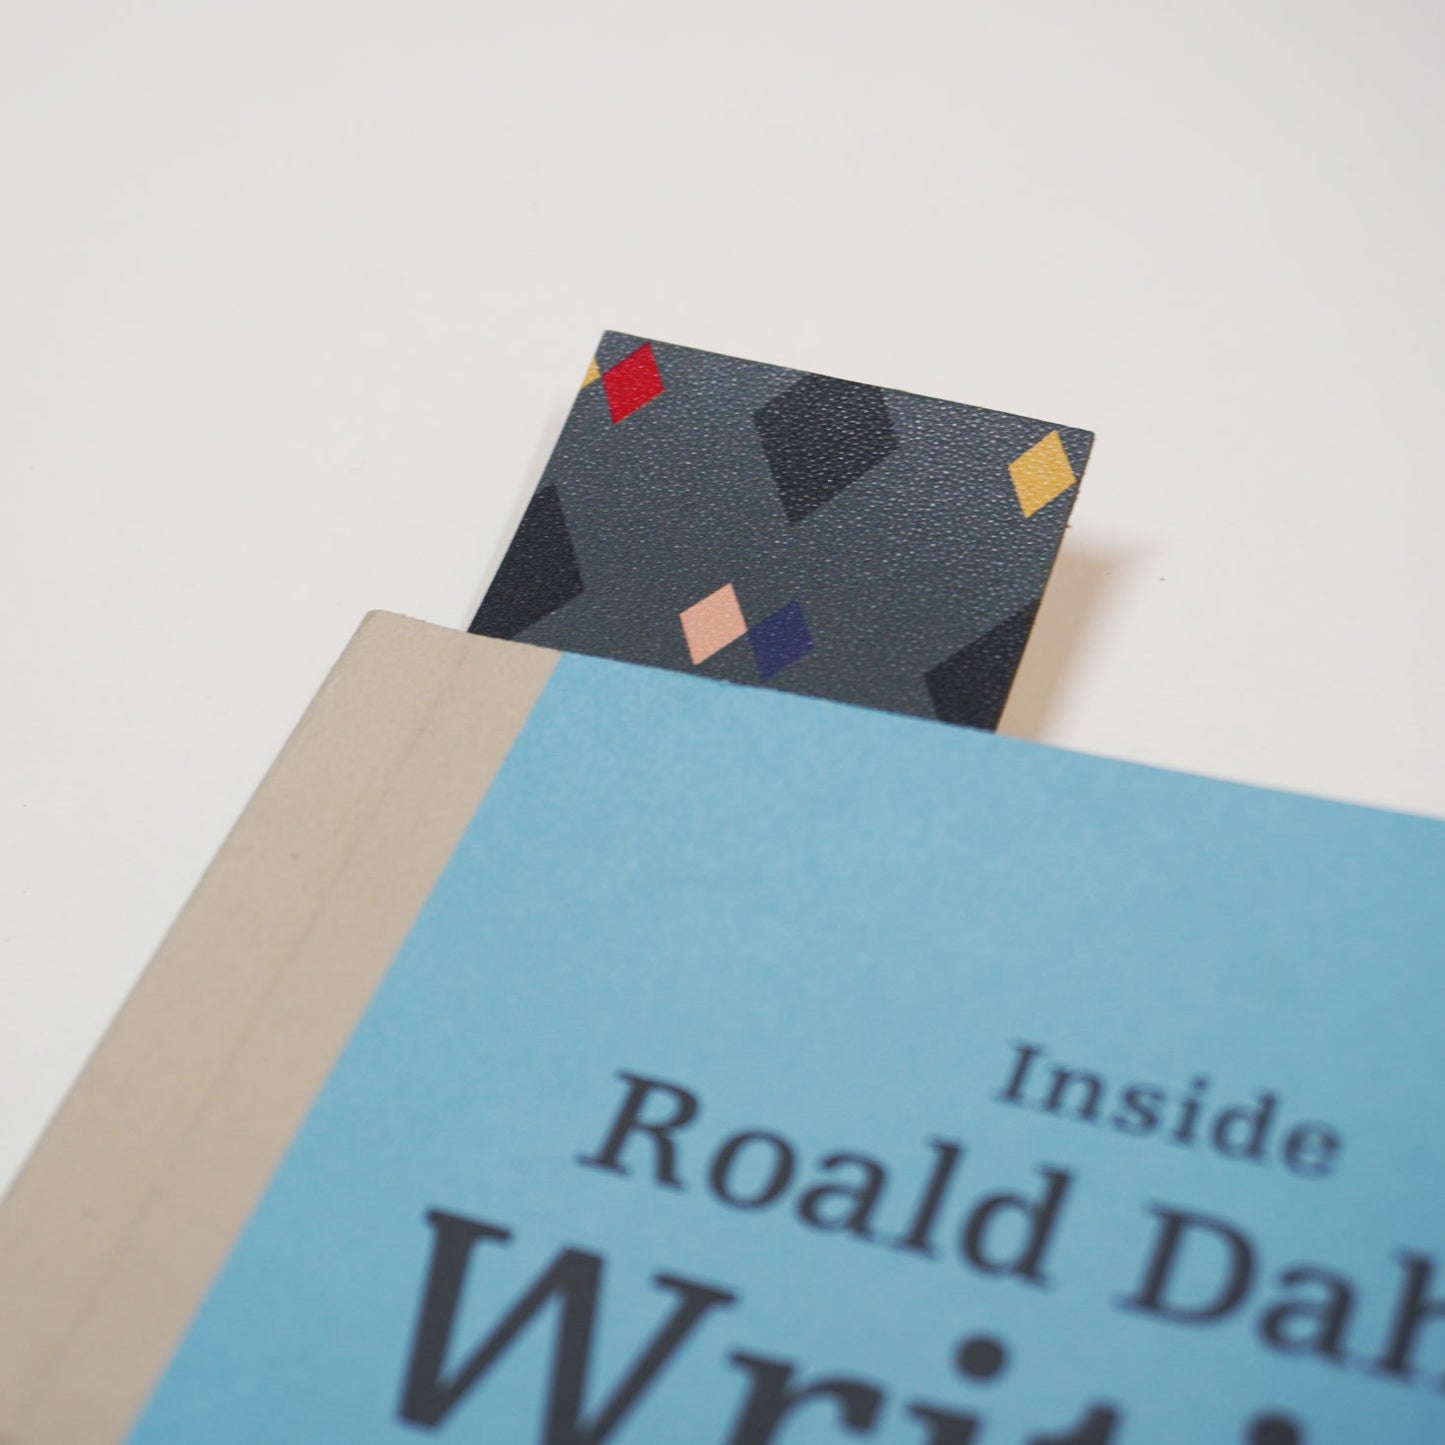 Roald Dahl's writing hut floor printed leather bookmark